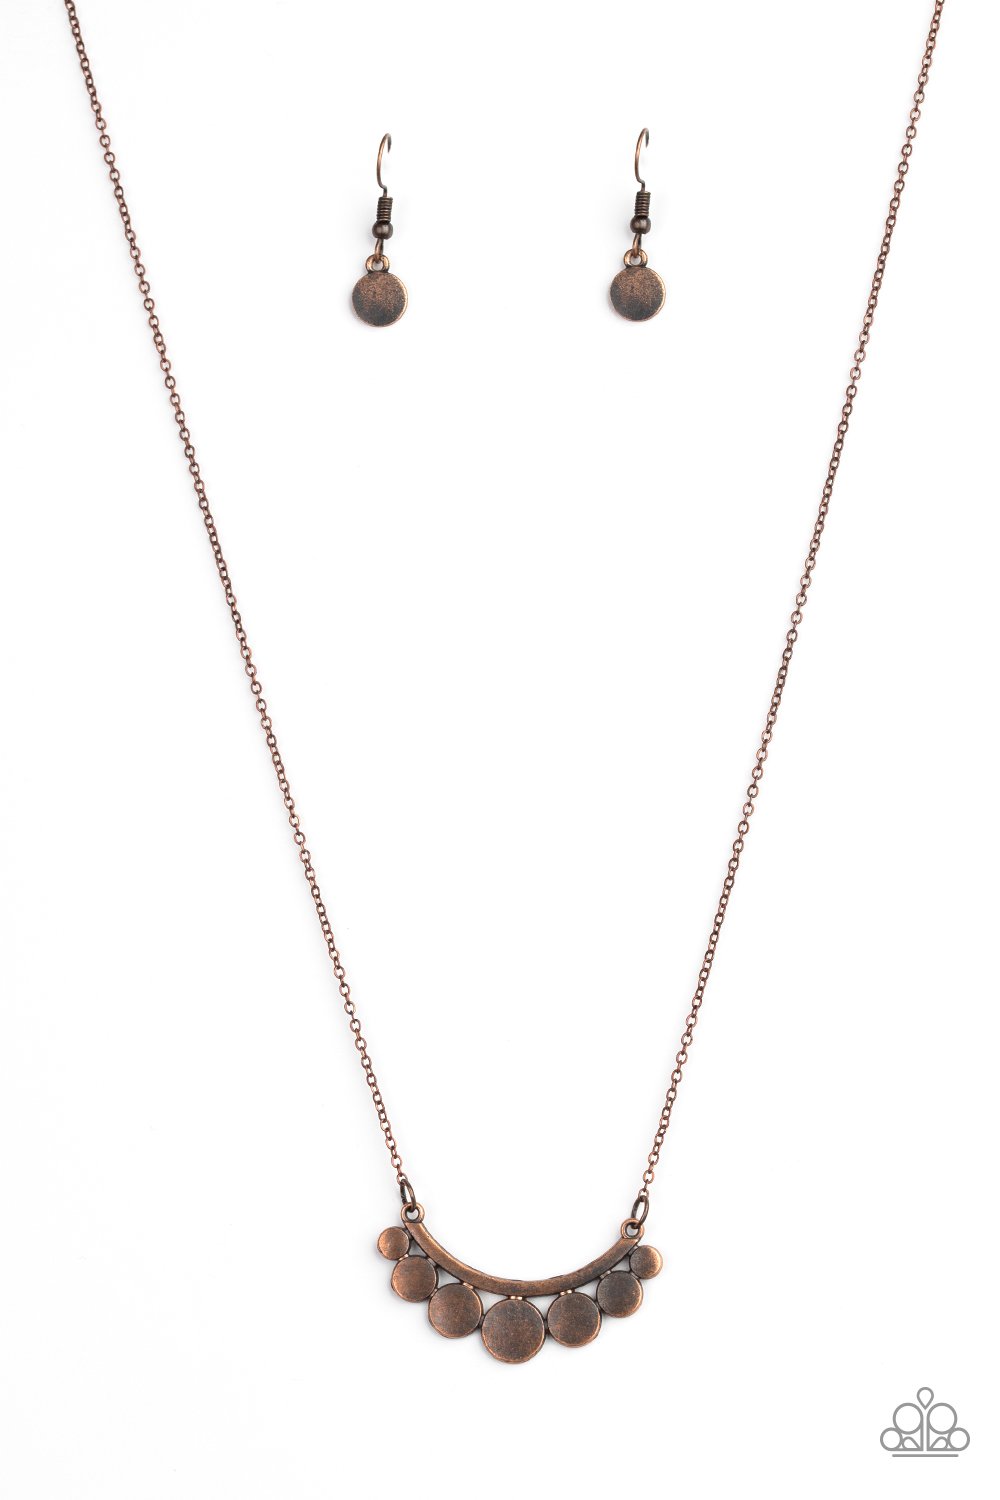 Melodic Metallics Copper Necklace freeshipping - JewLz4u Gemstone Gallery